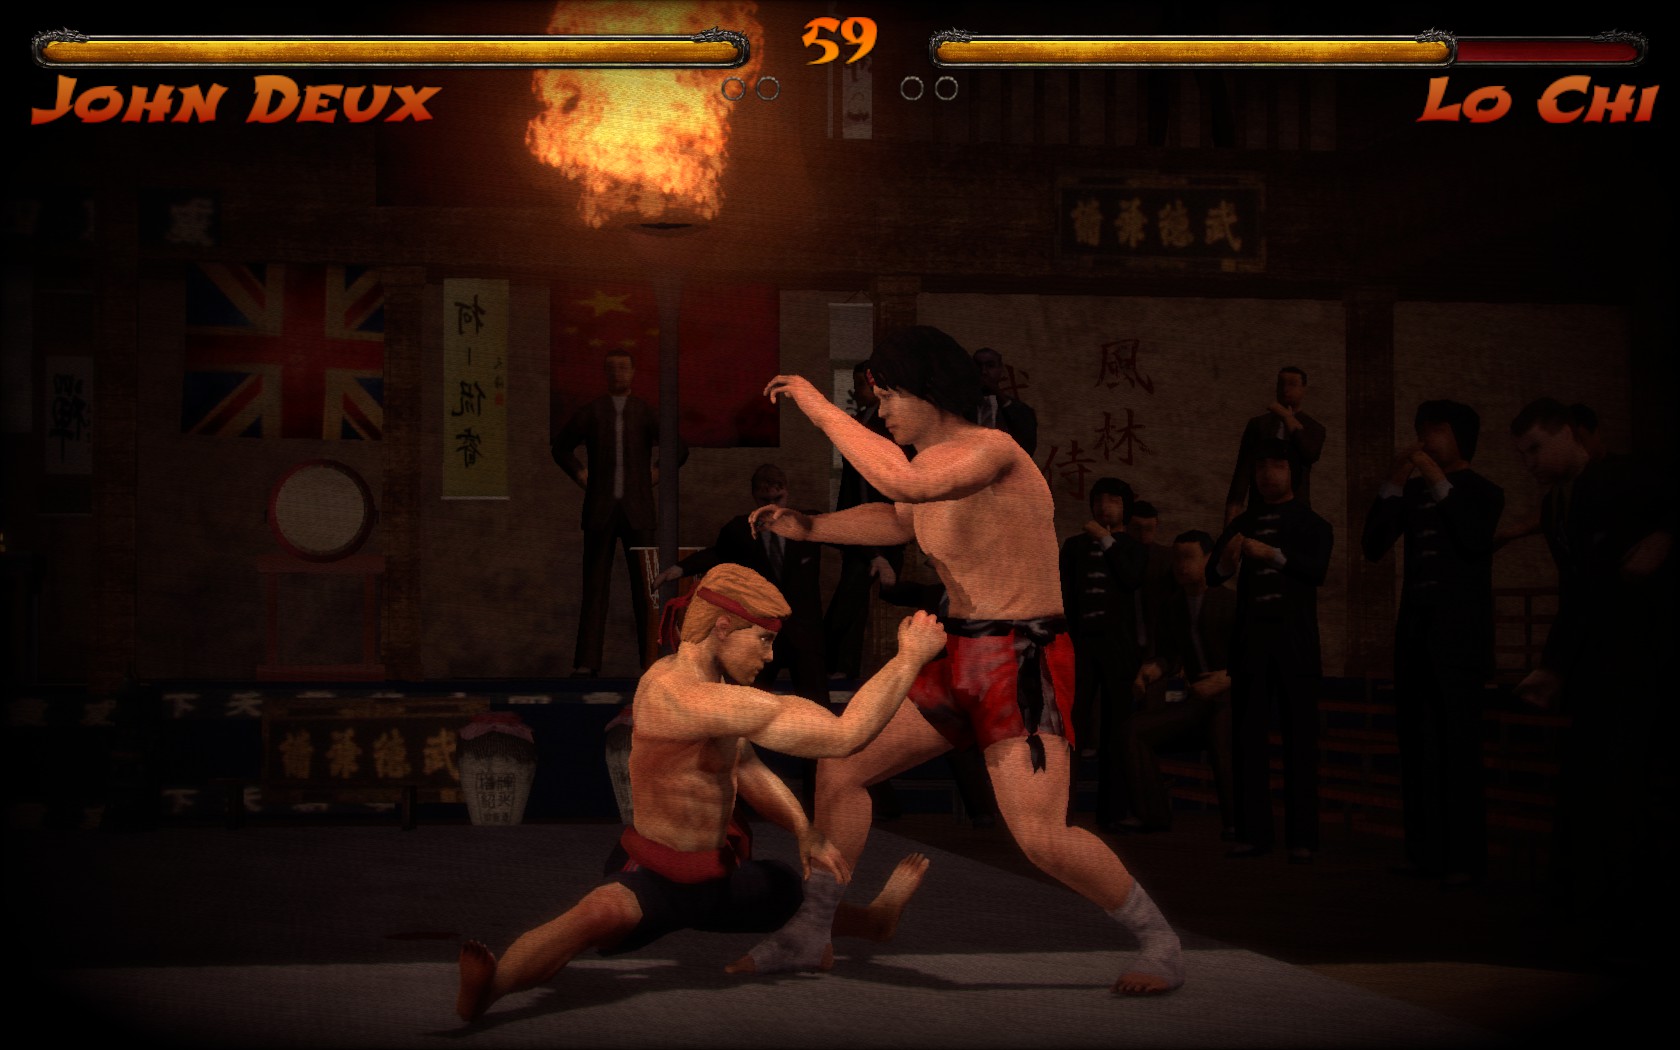 Kings of Kung Fu screenshot